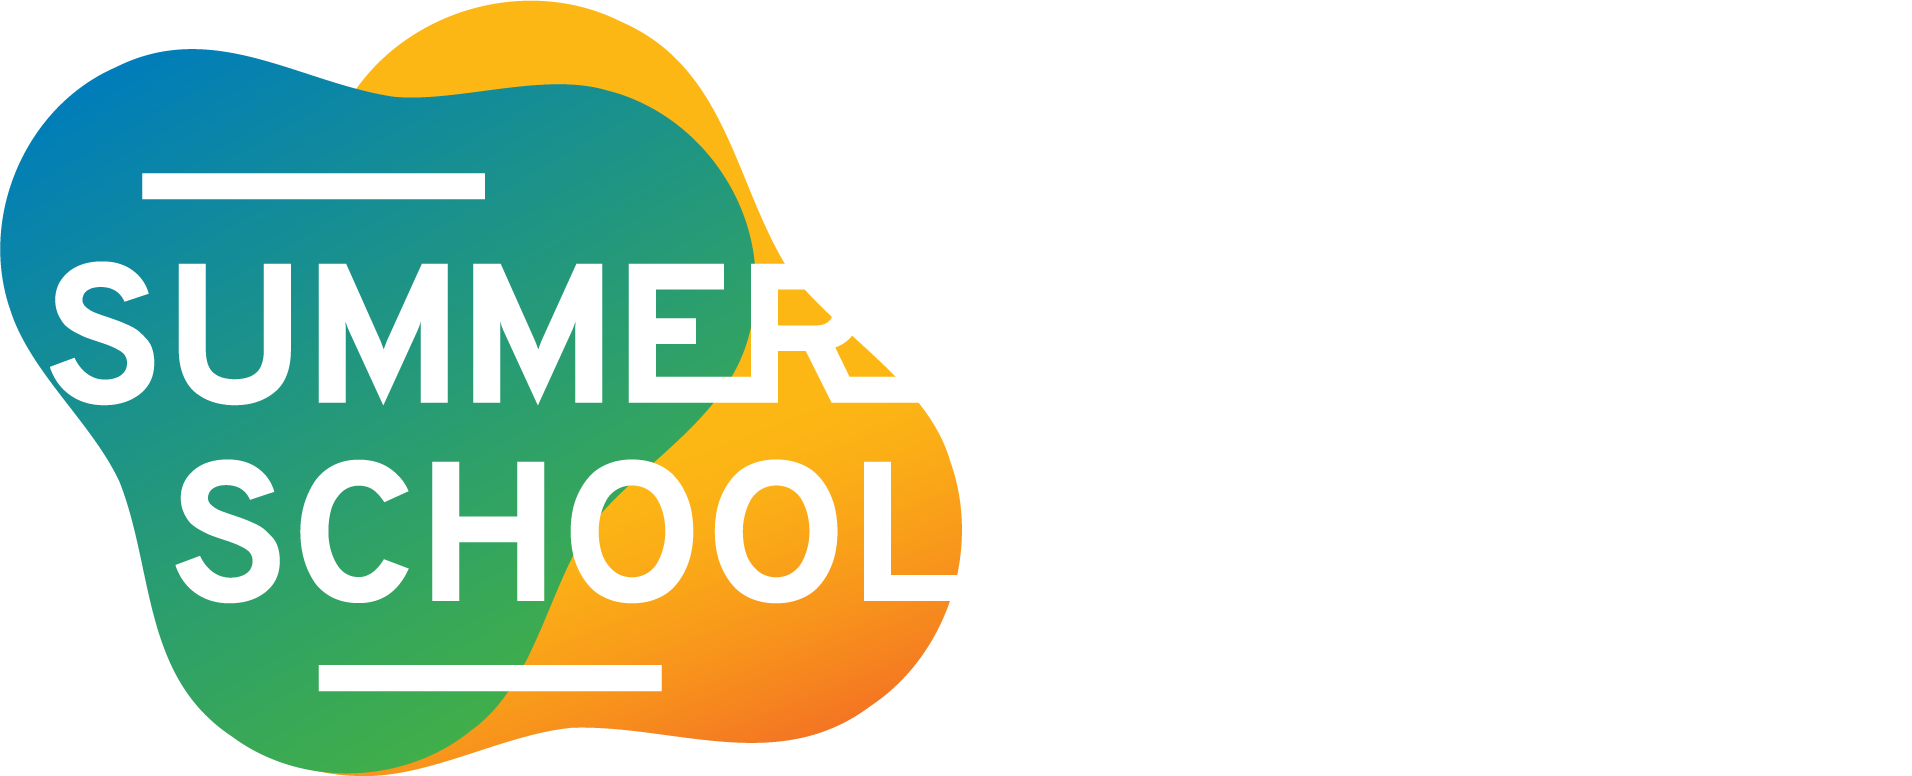 cirodd-summer-school-logo-1912x776